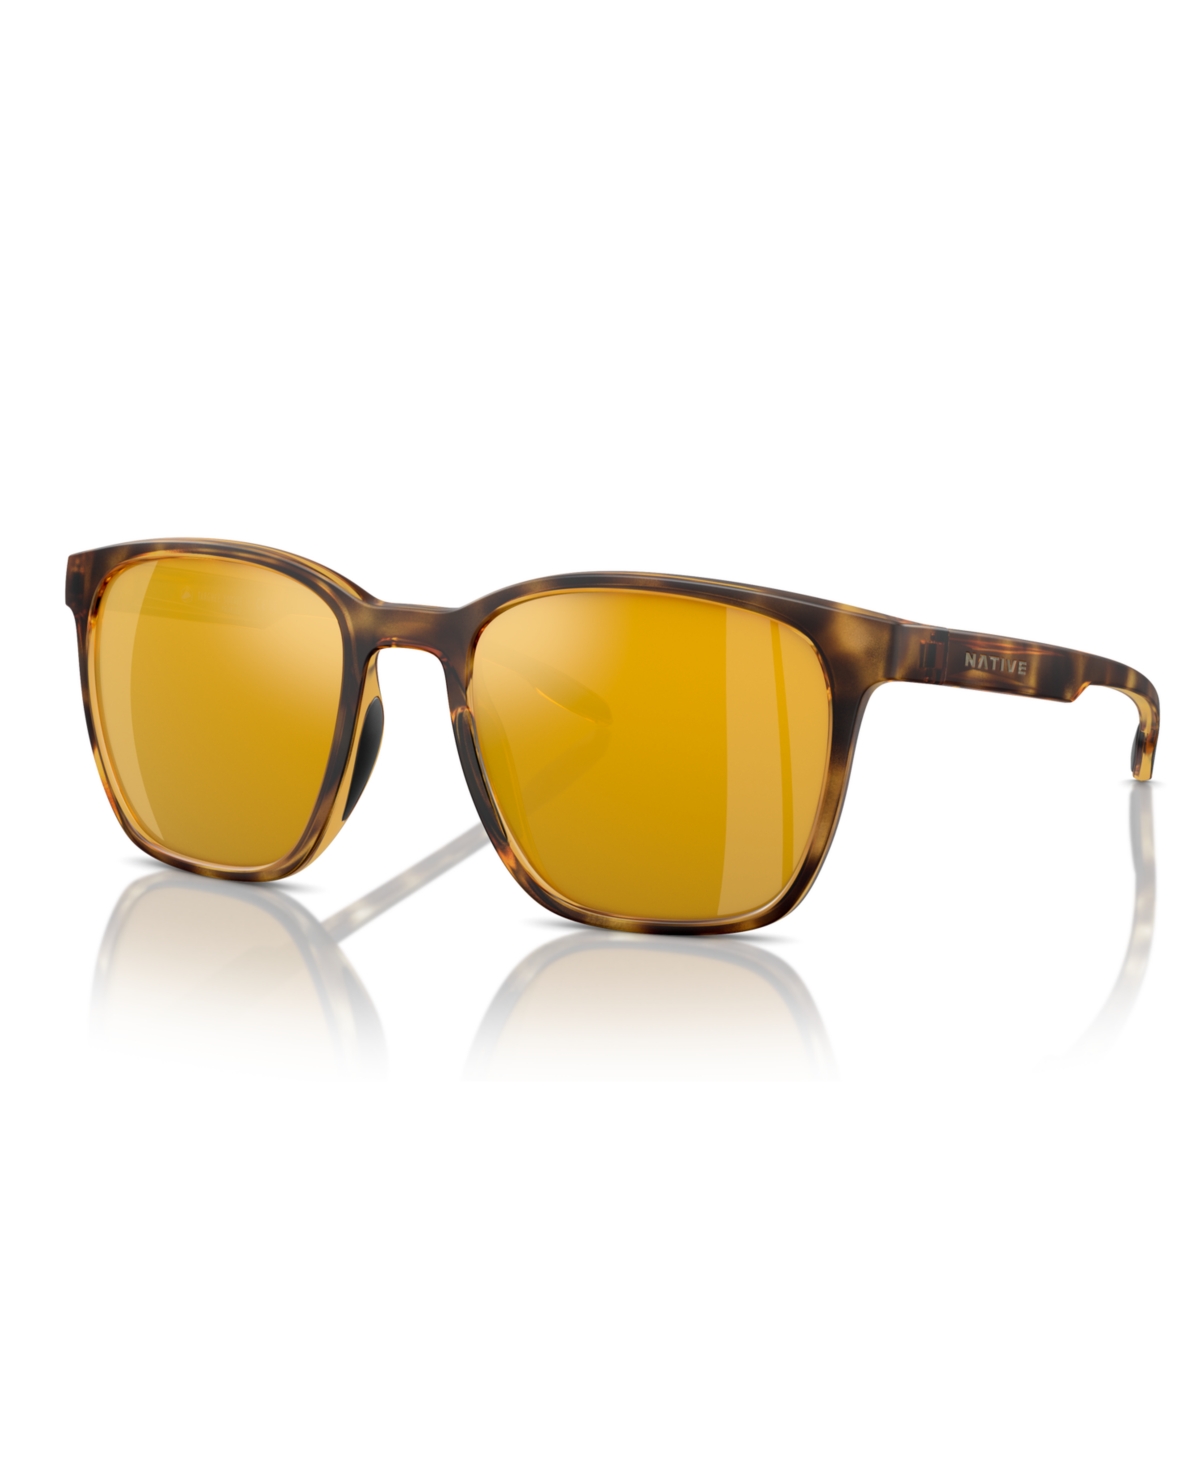 Unisex Polarized Sunglasses, Targhee Square Xd9046 - Smokey Quartz